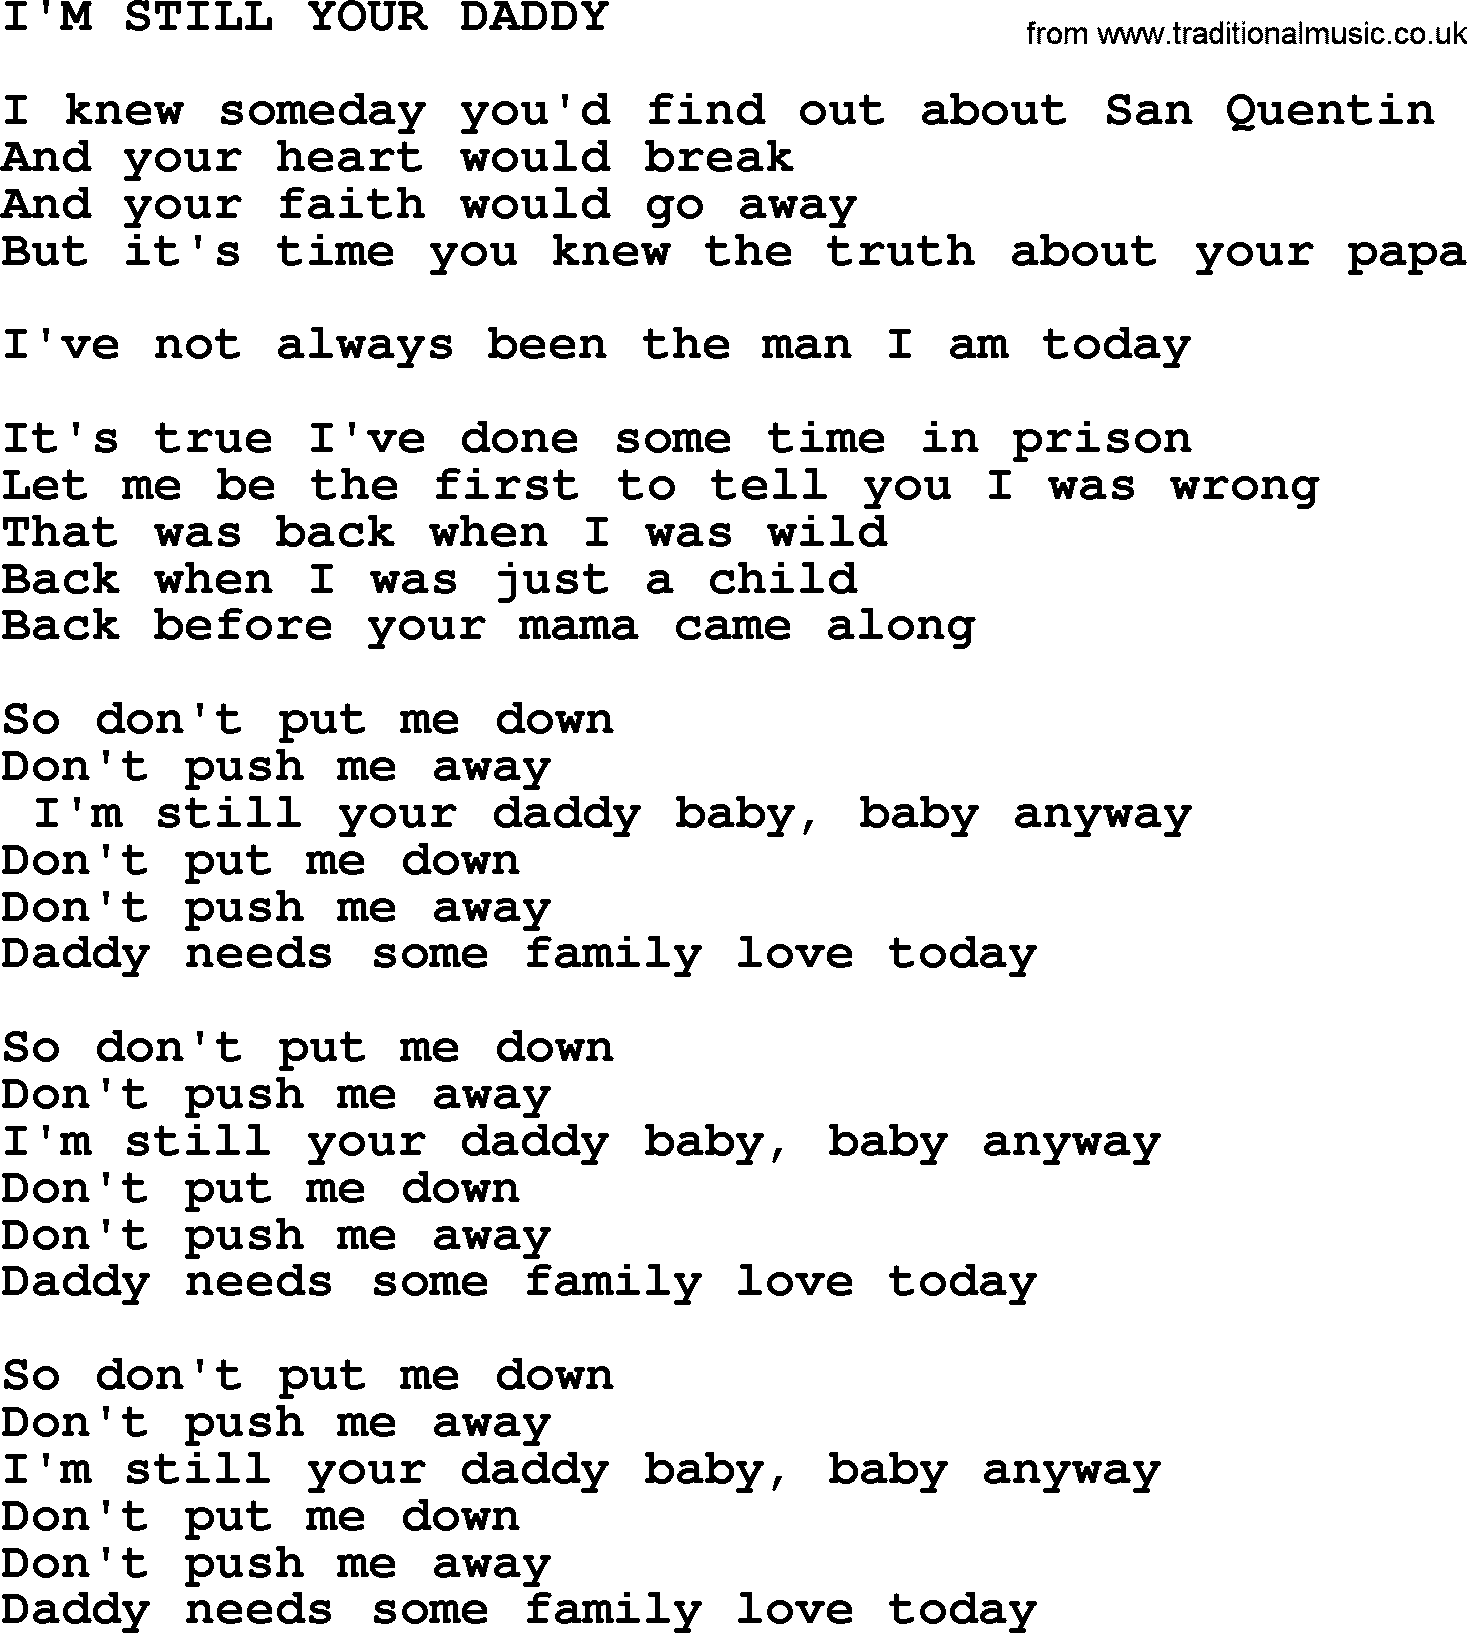 Merle Haggard song: I'm Still Your Daddy, lyrics.